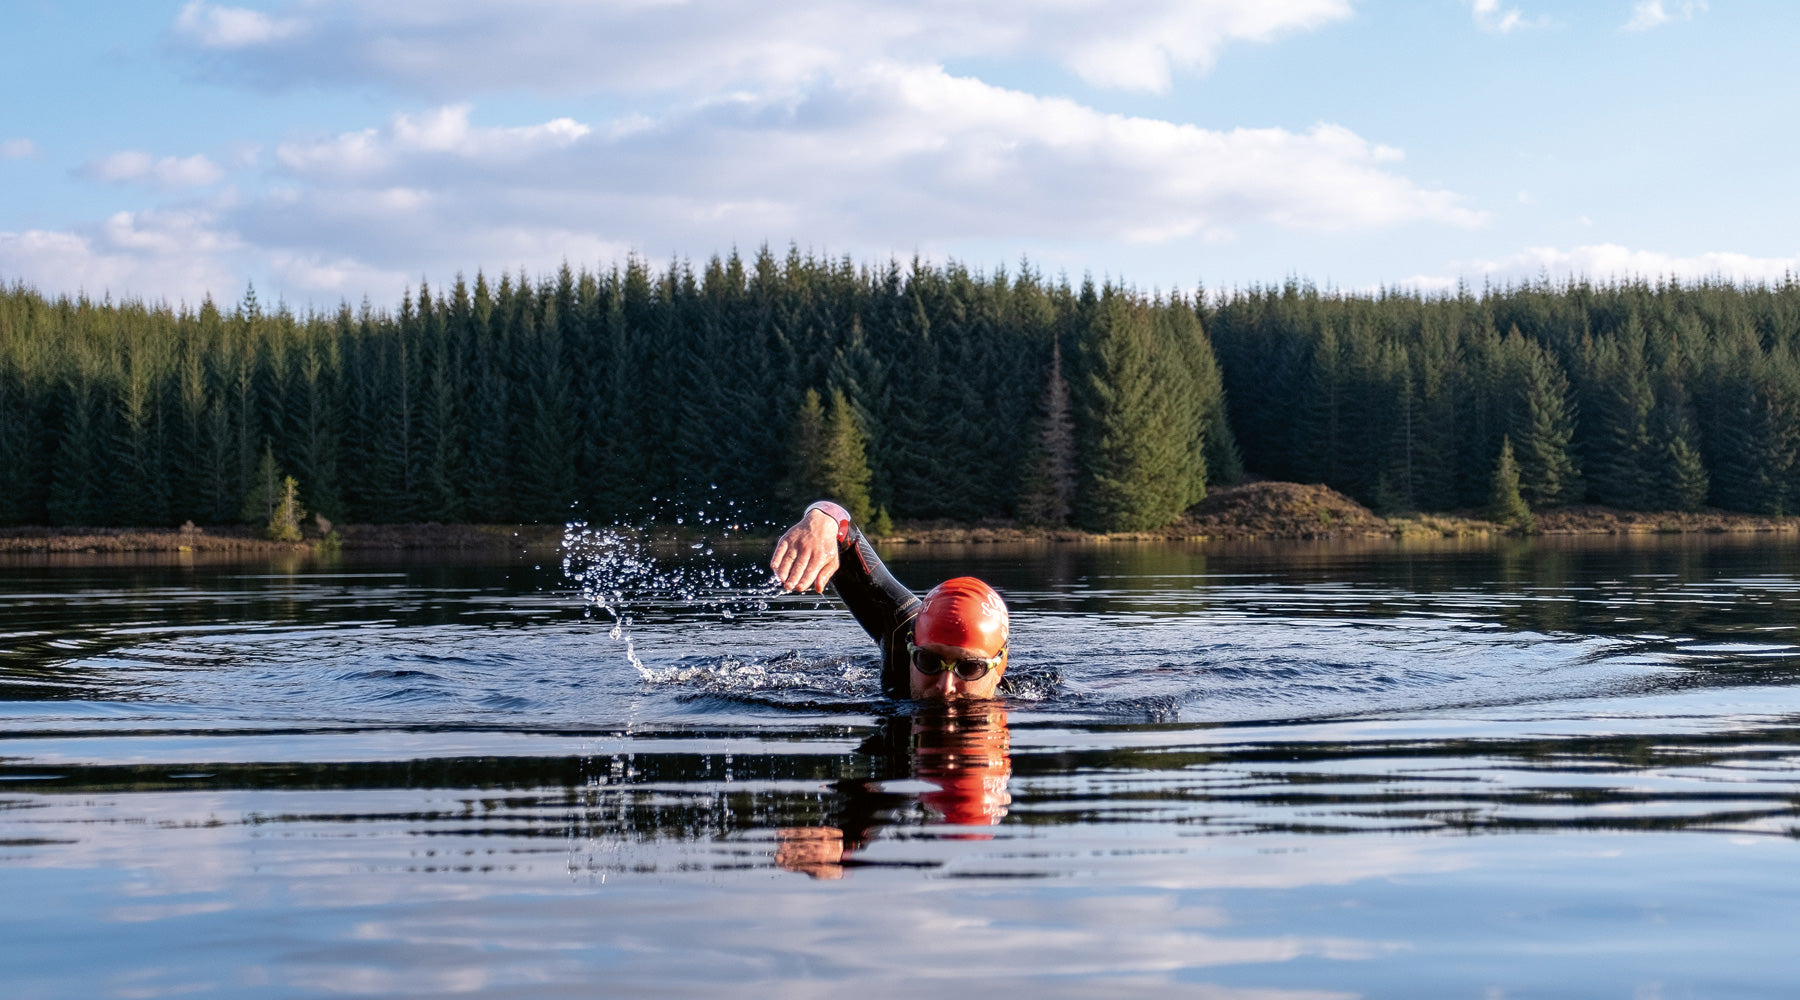 NEWS: Outdoor swimmer makes a splash on TikTok with 16M views